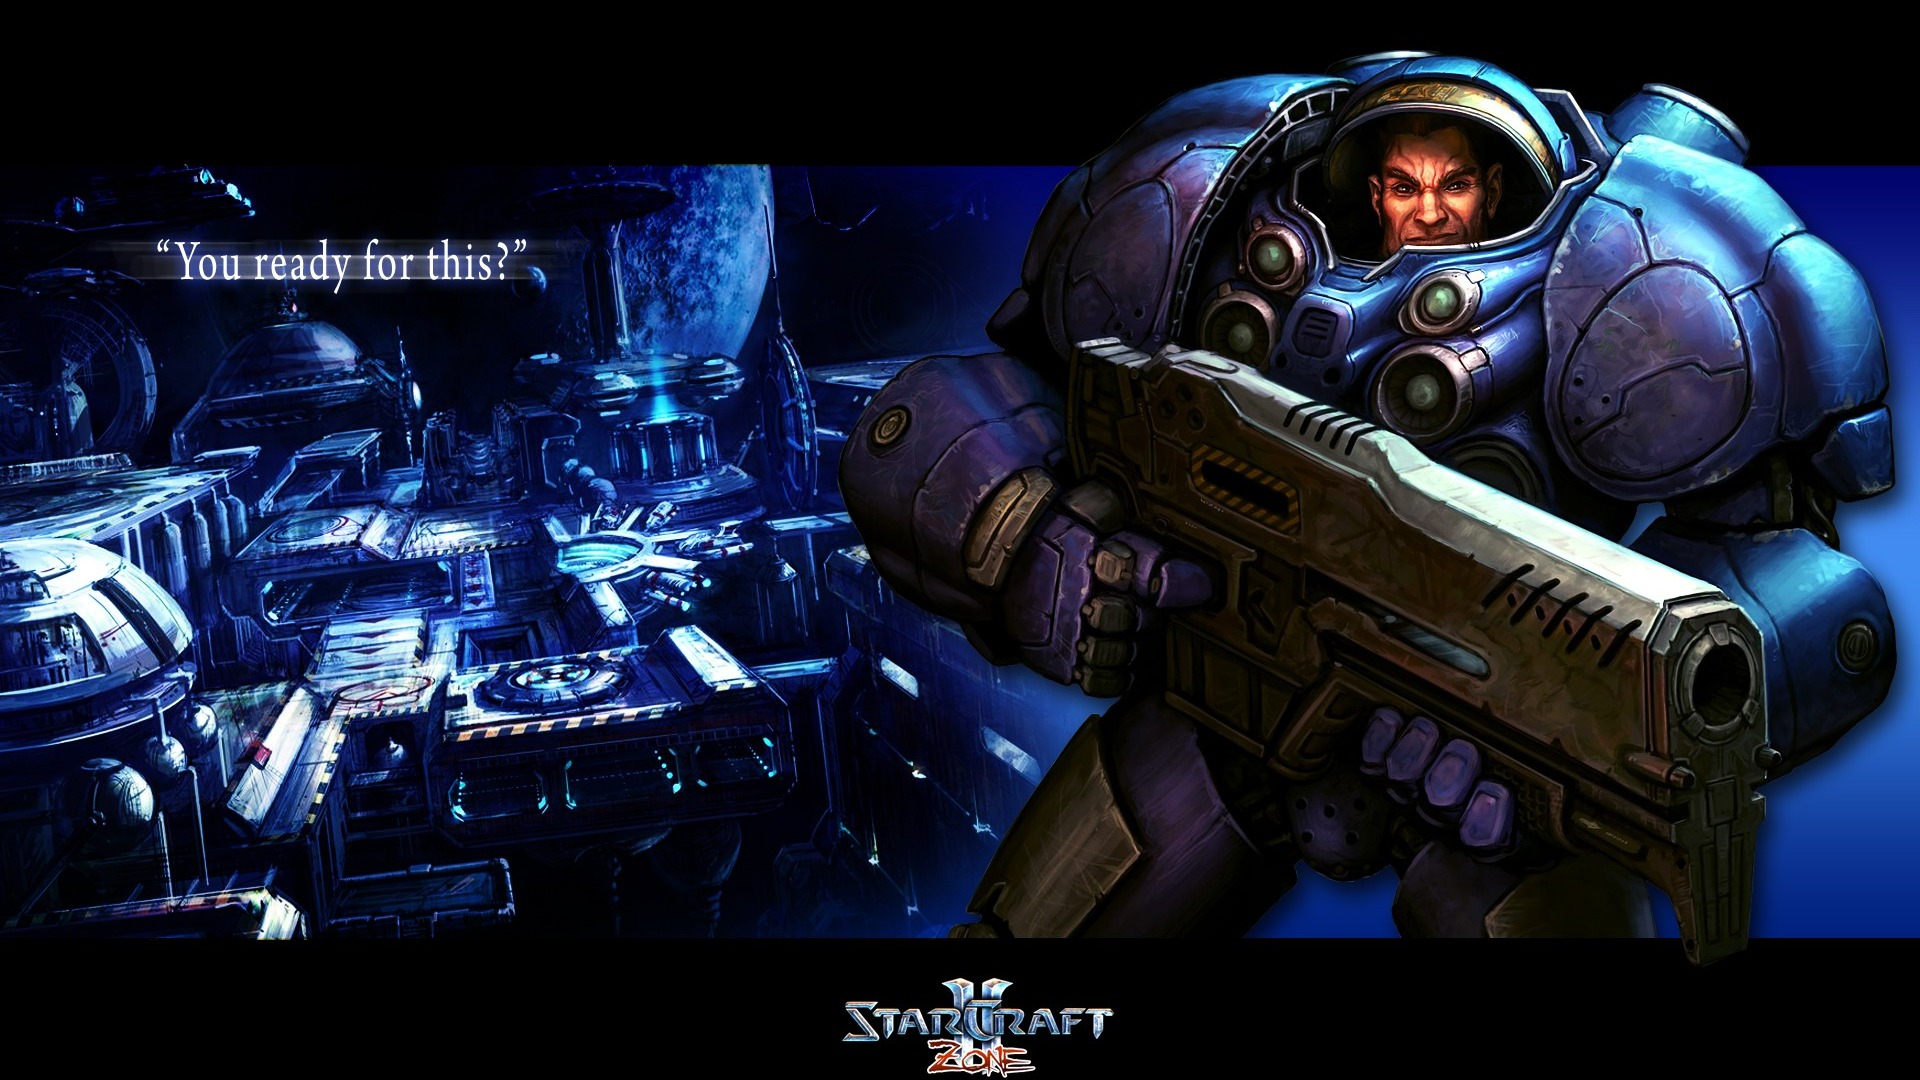 Starcraft HD Papel Tapiz Fondos De Descarga